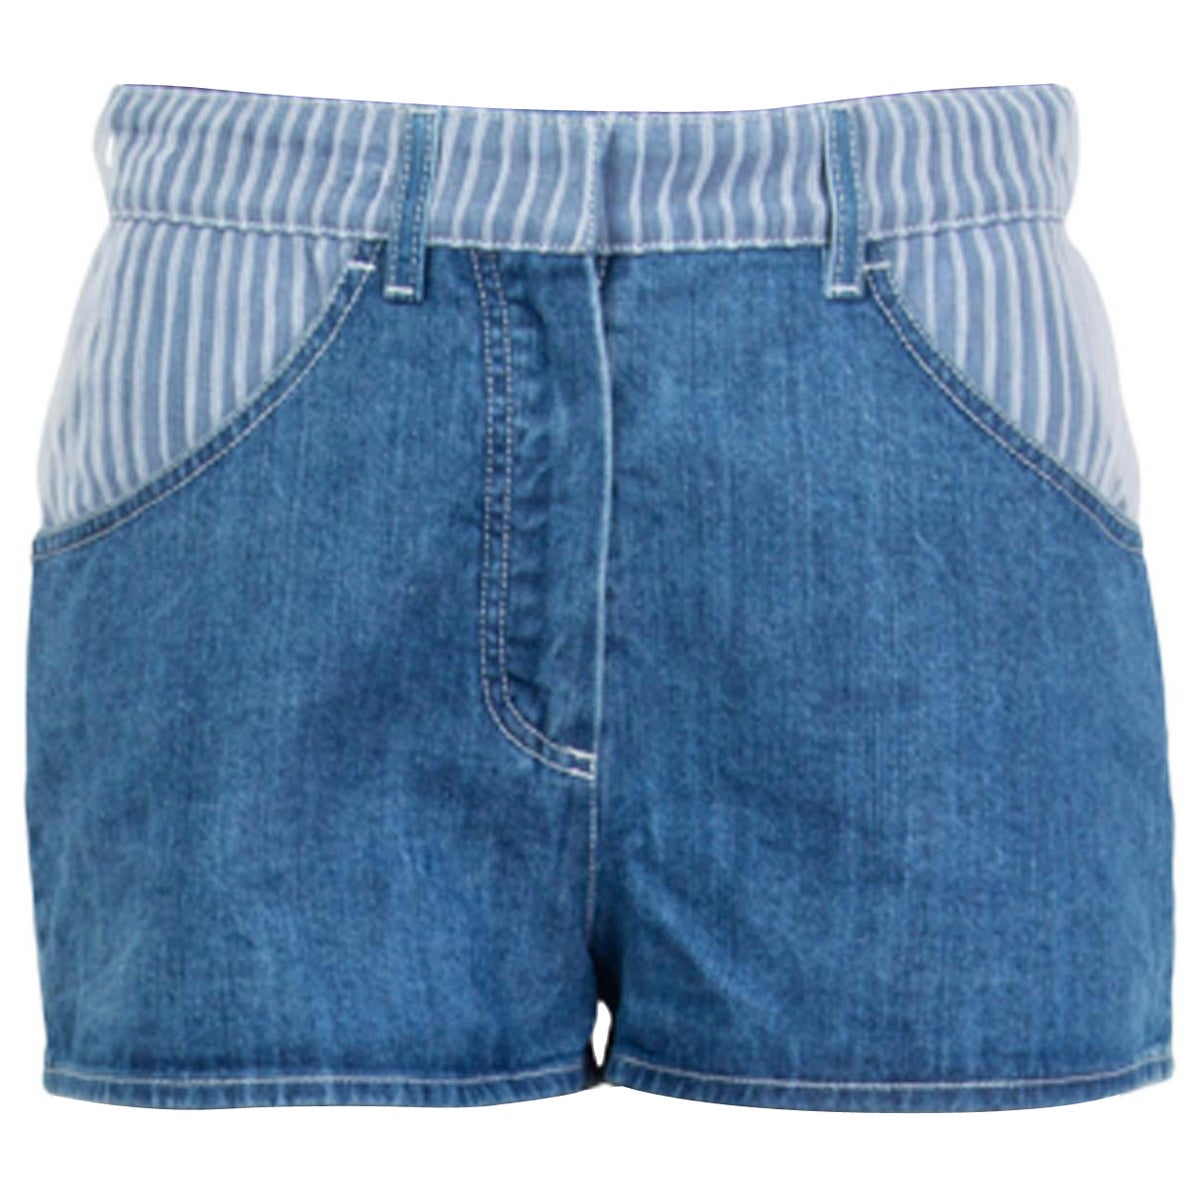 Chanel 2014 Stripe Details Denim Hot Pants Shorts